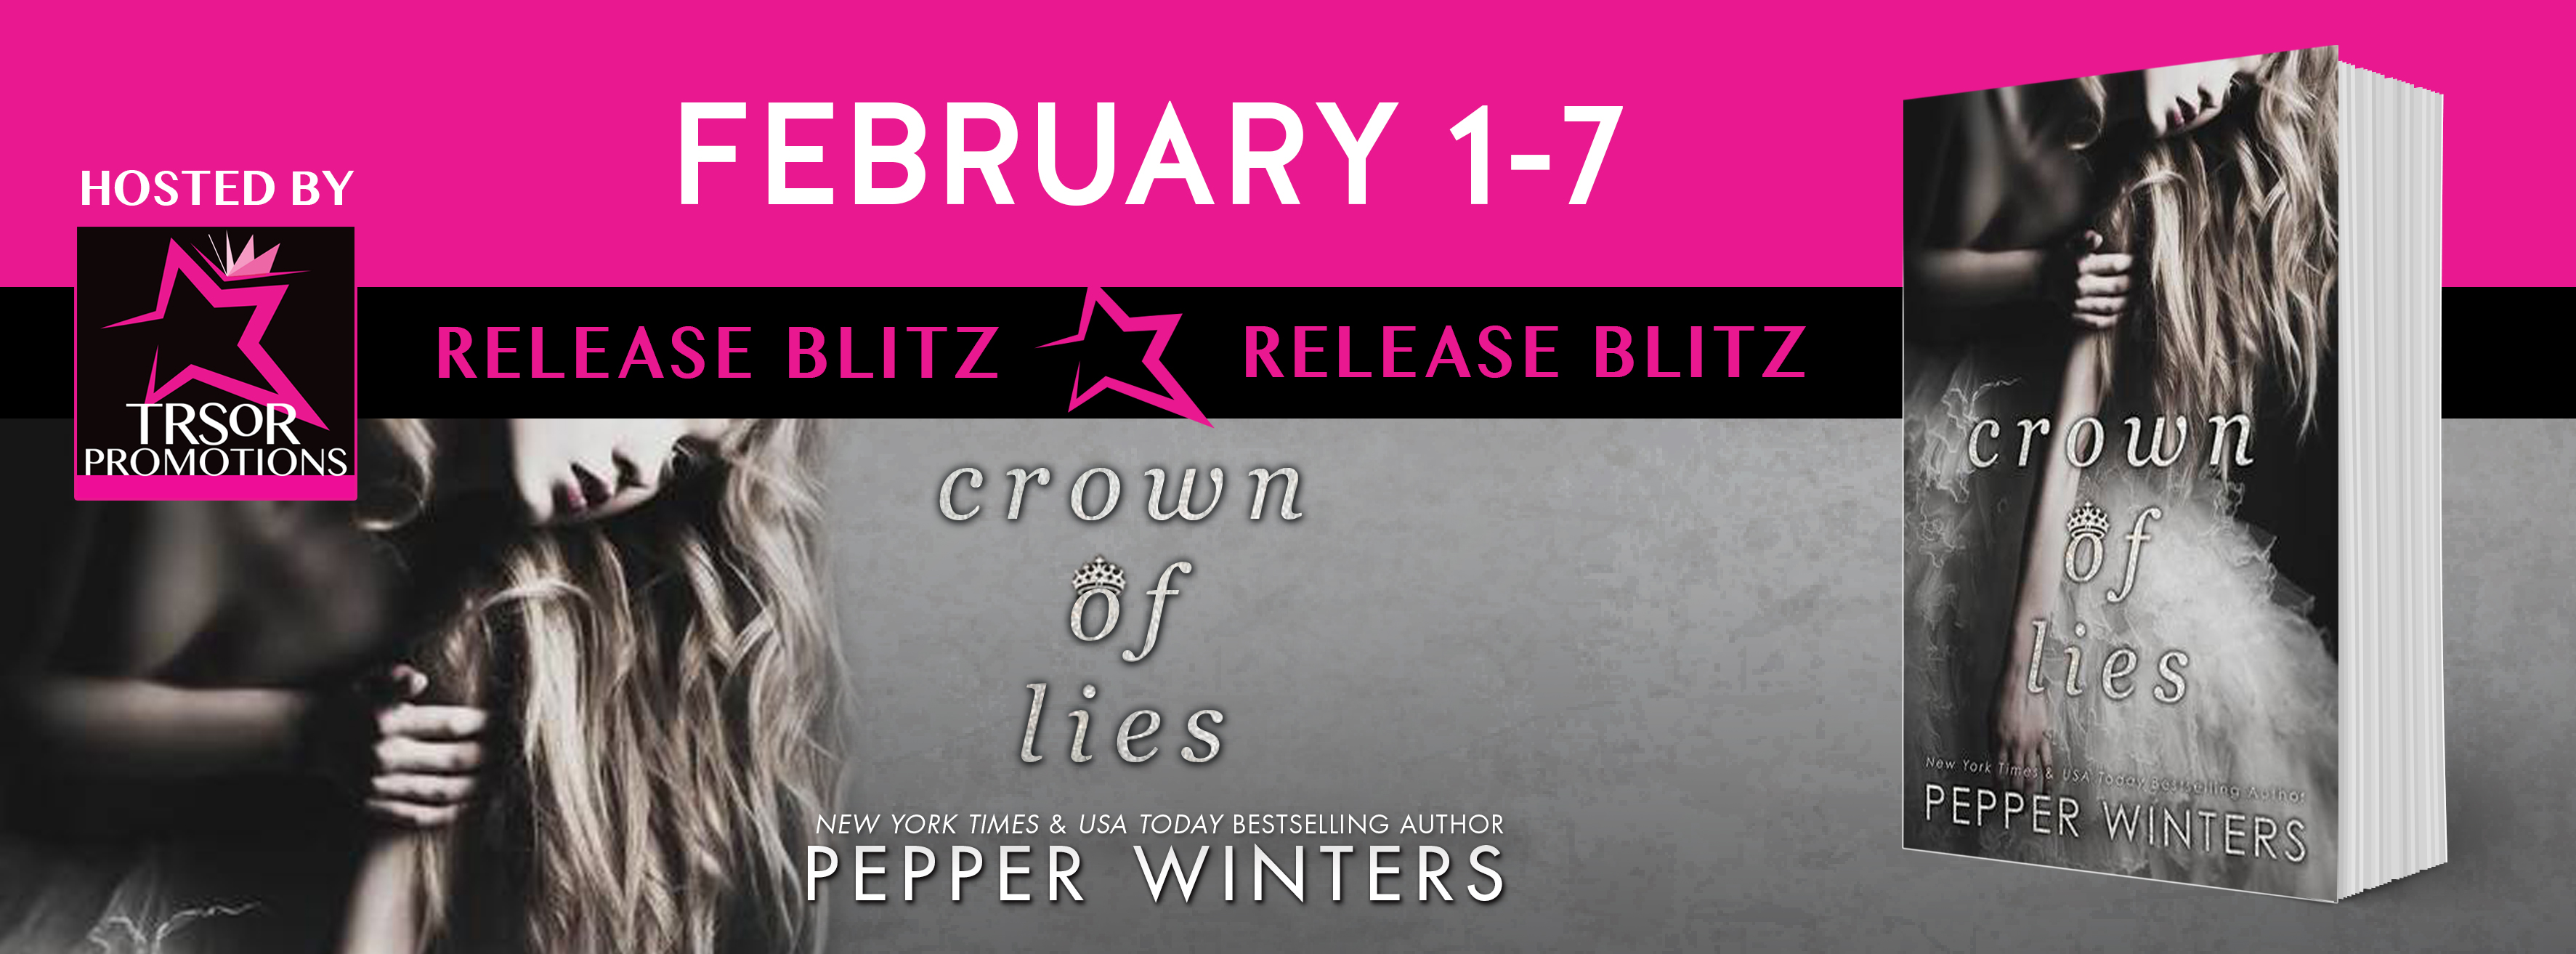 Crown of Lies by Pepper Winters #NewlyReleased